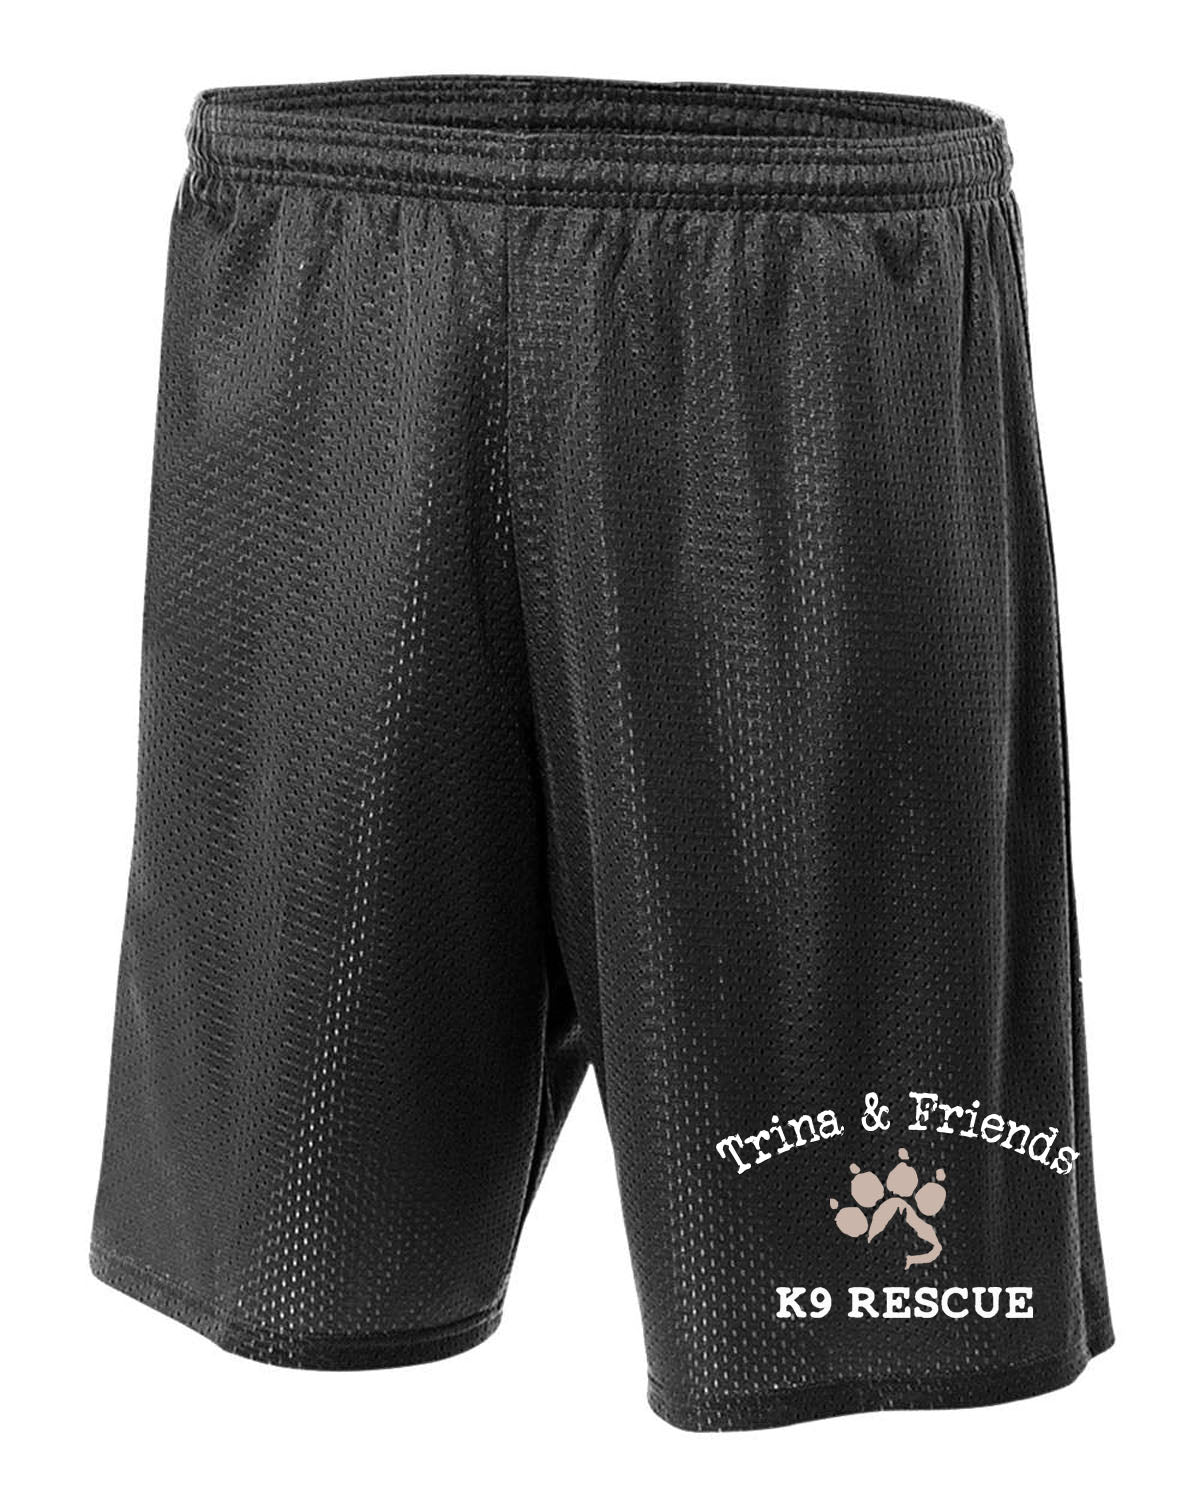 Trina & Friends Design 6 Mesh Shorts